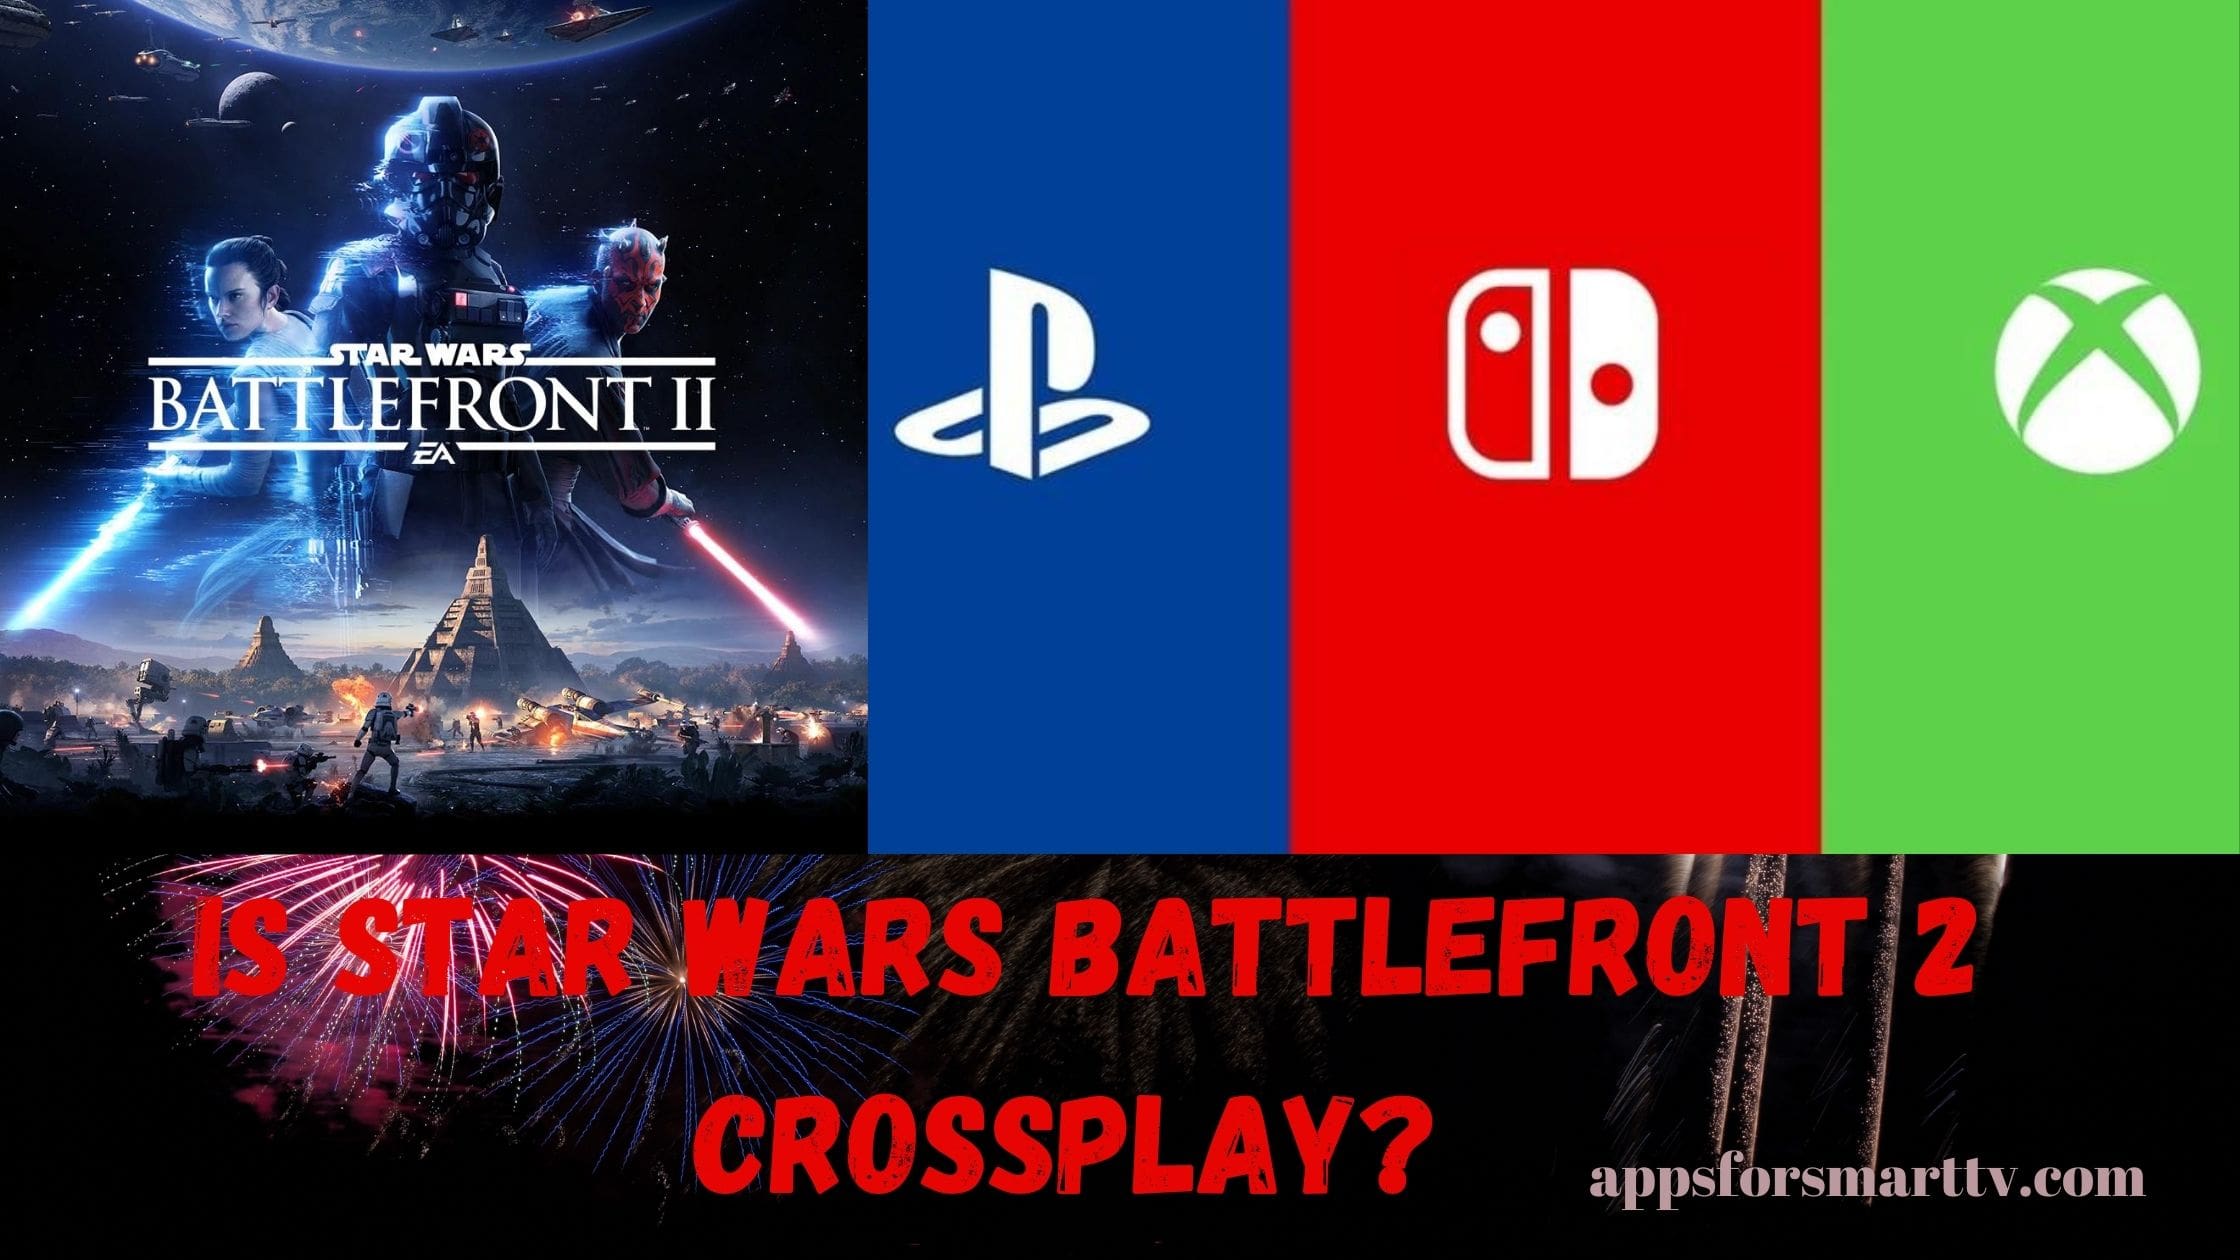 Is Star Wars Battlefront 2 CrossPlay?